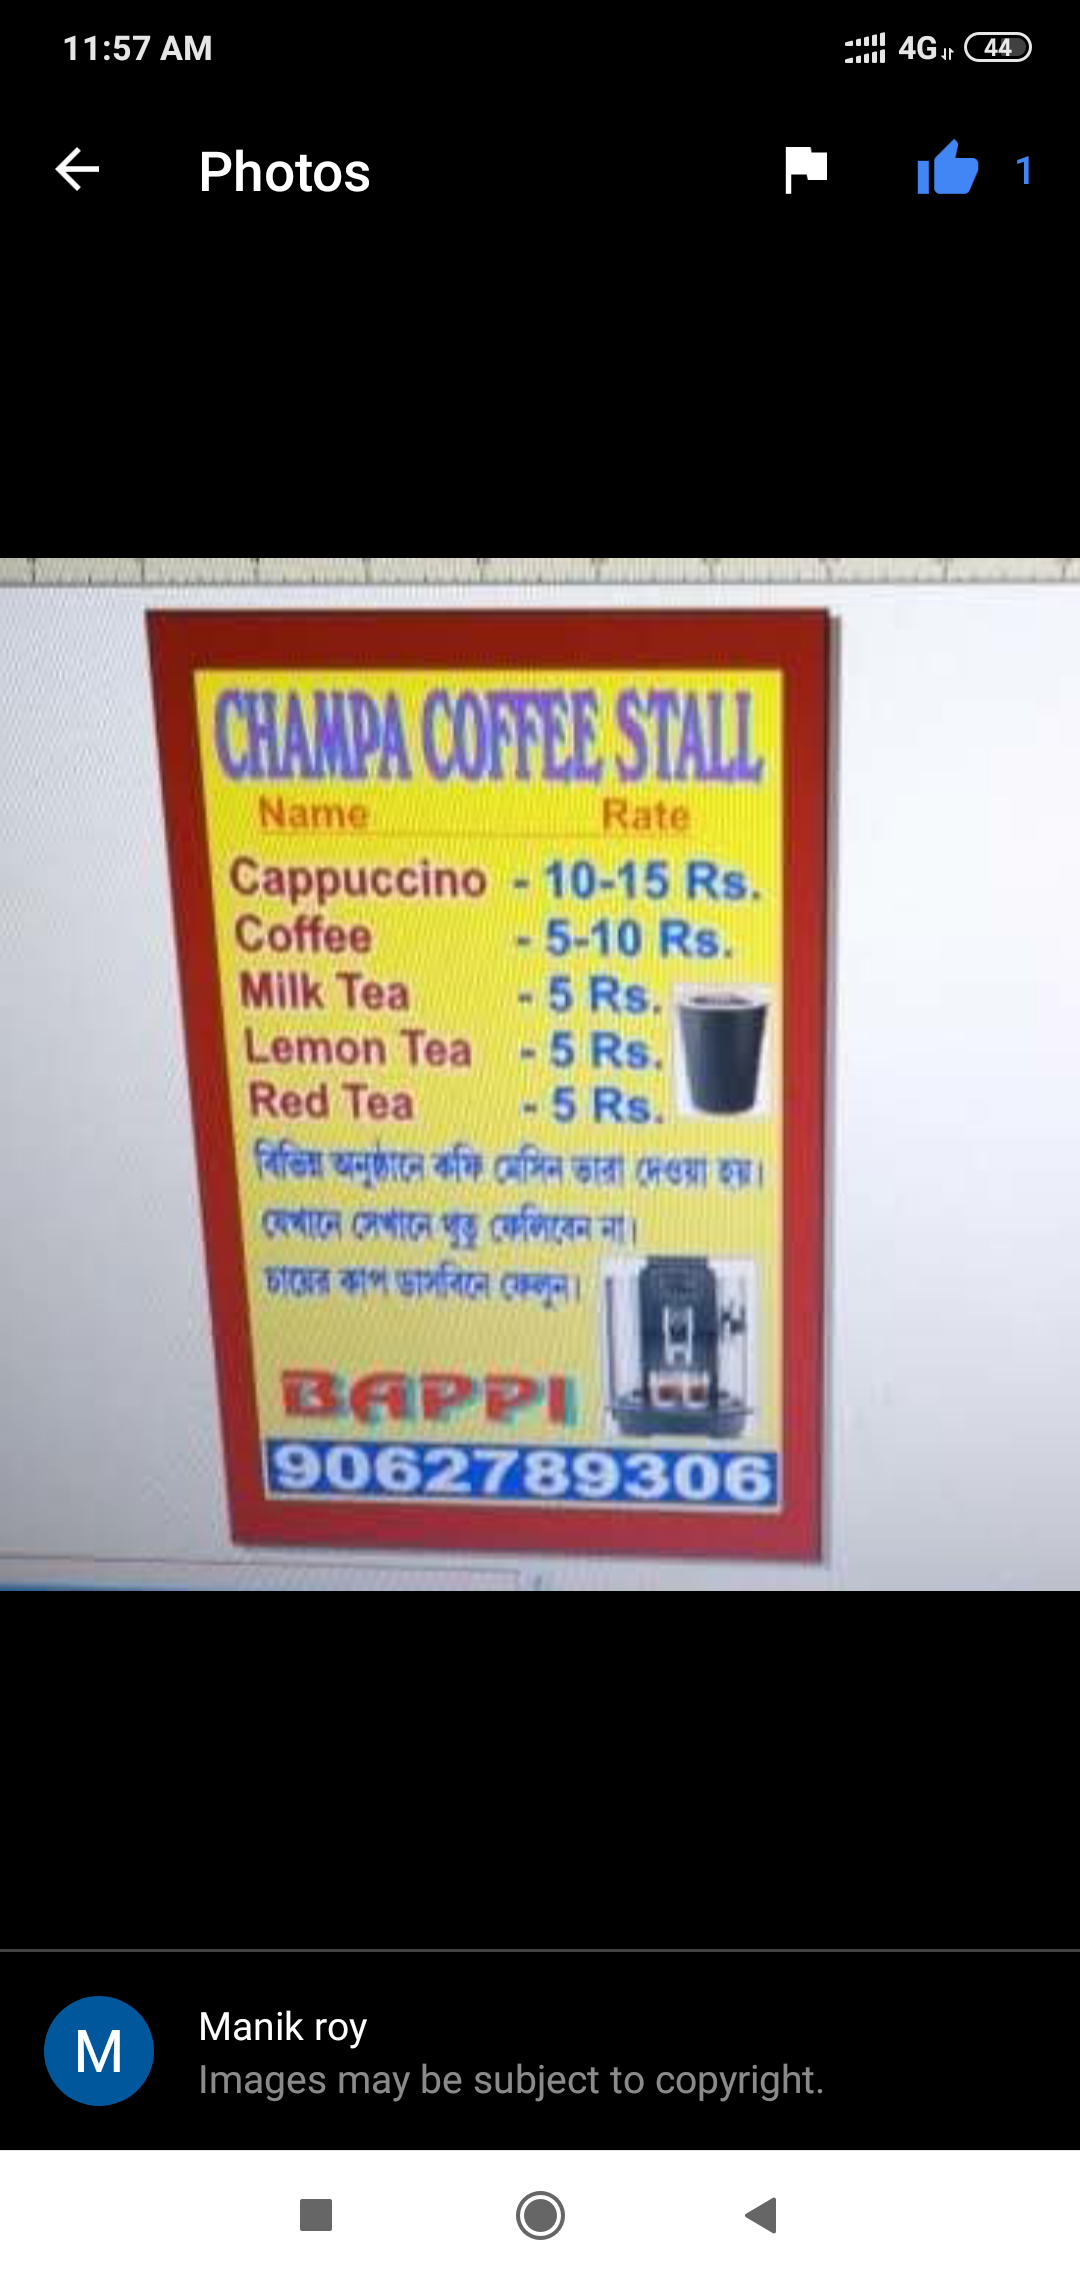 Champa Coffee stall